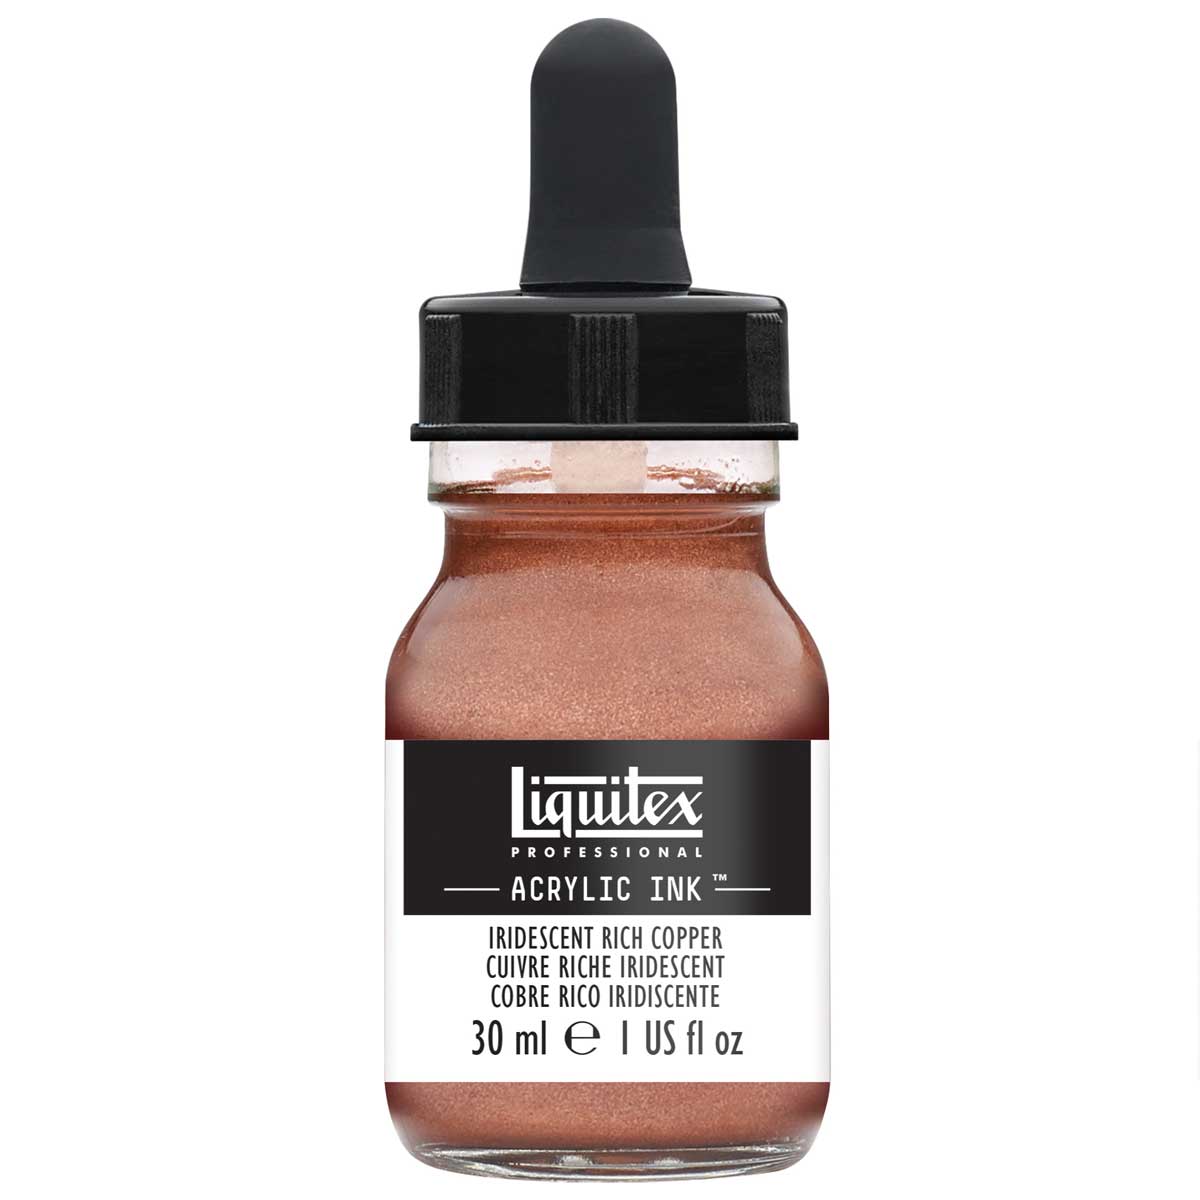 Liquitex Professional Acrylic Ink - Iridescent Rich Copper 30ml/1oz